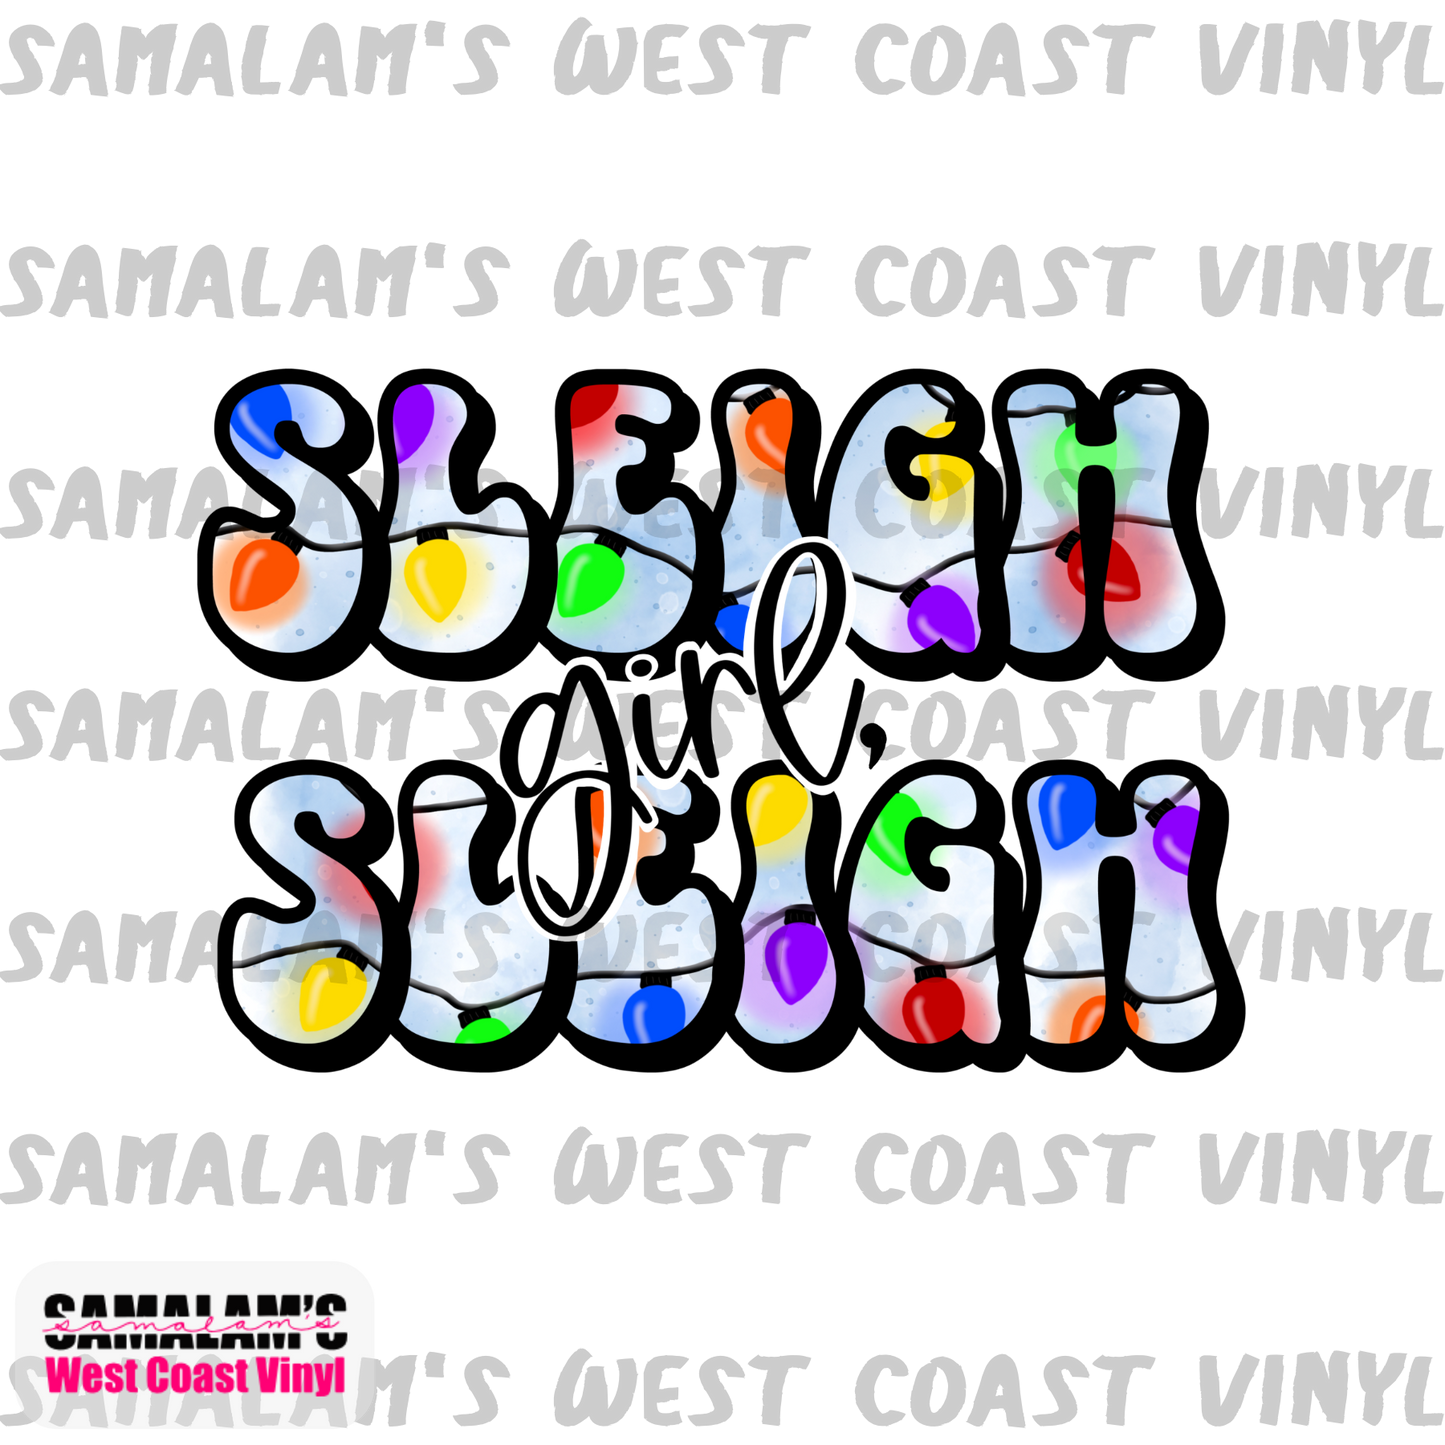 Sleigh Girl Sleigh - Sublimation Transfer